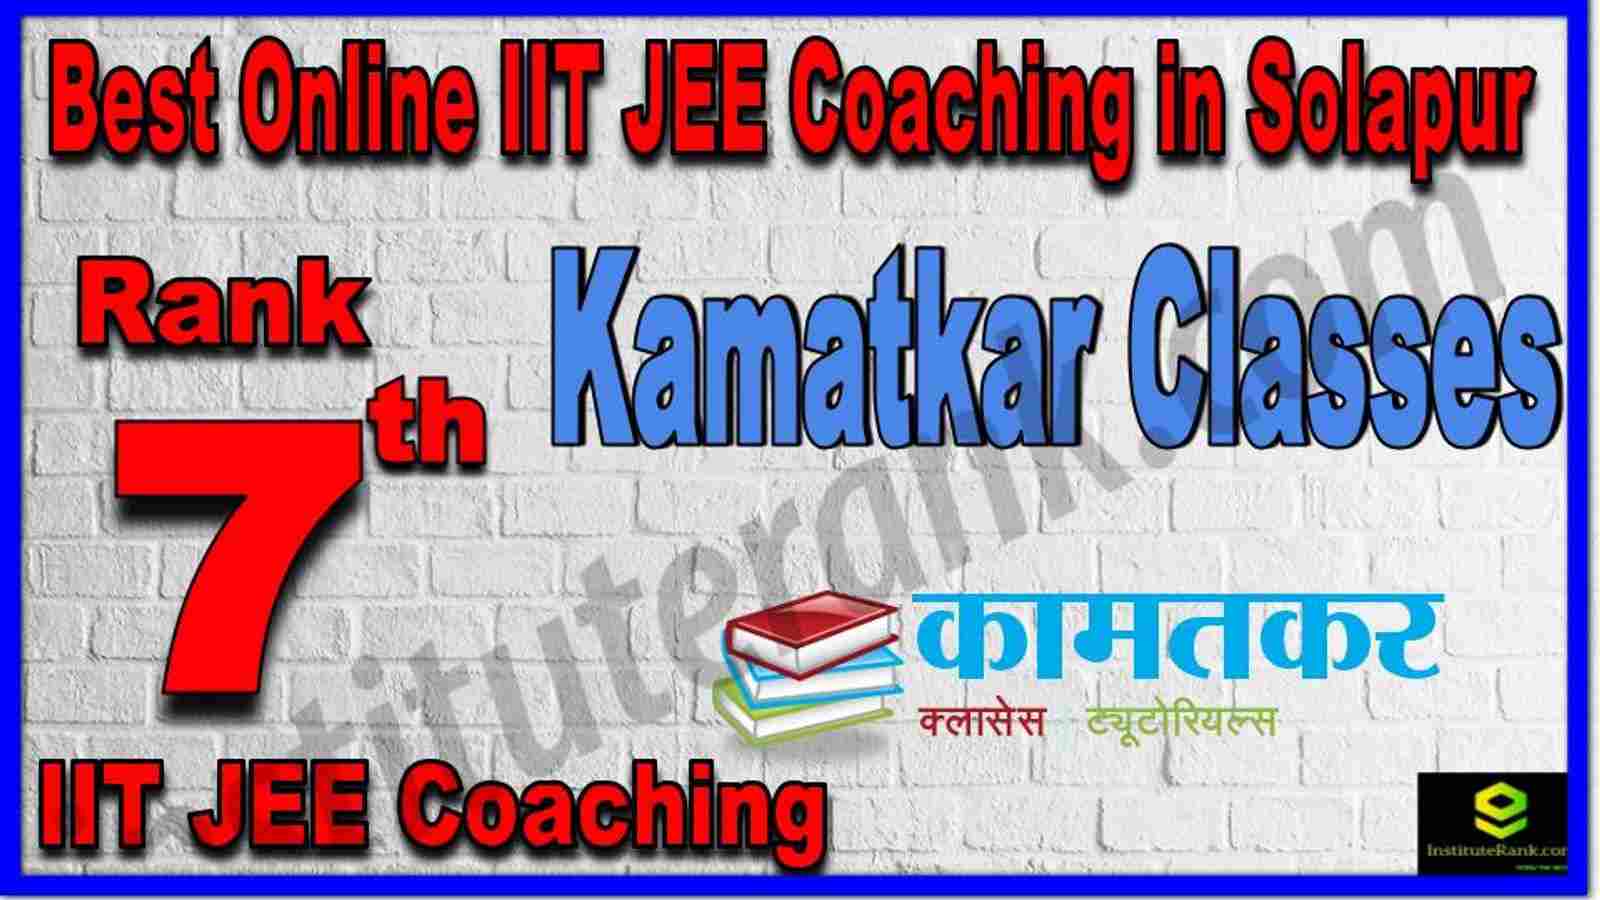 Rank 7th Best Online IIT JEE Coaching in Solapur